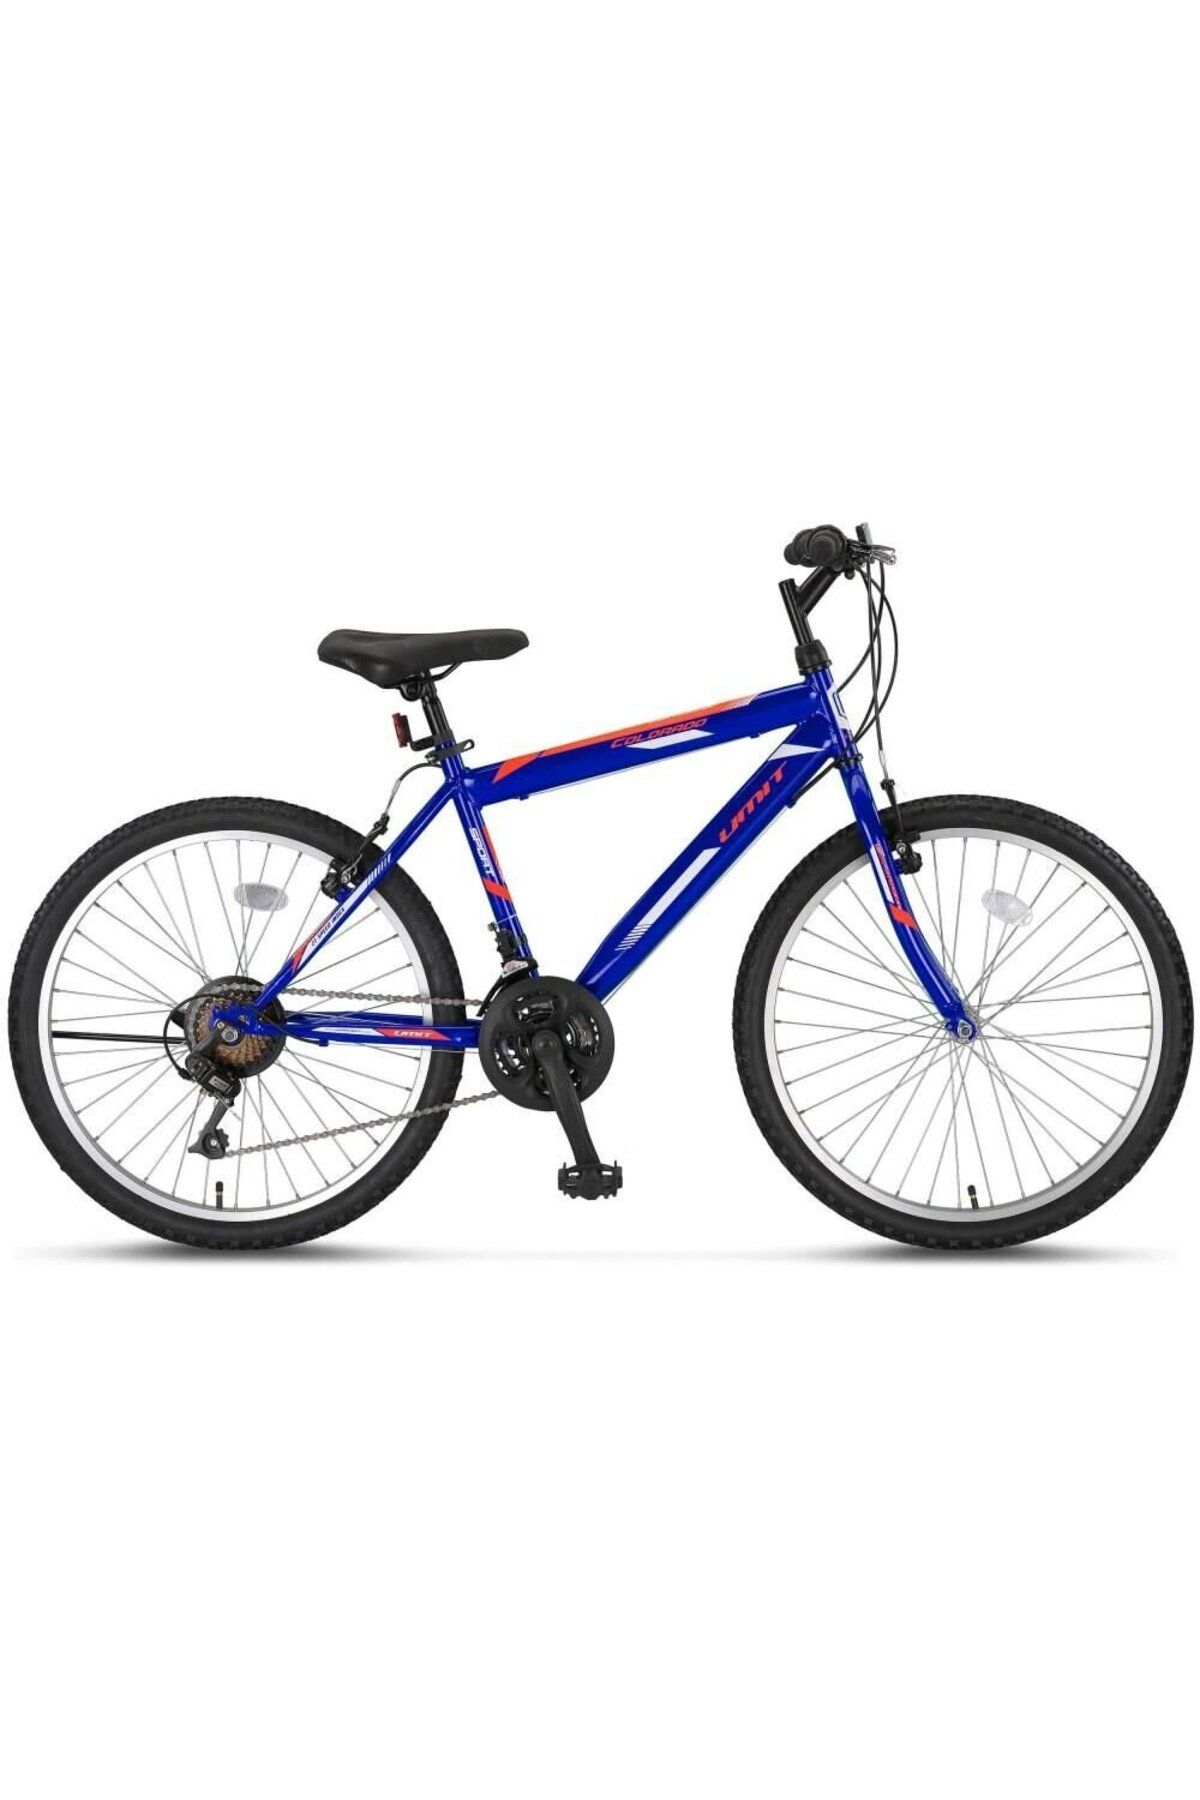 Ümit Bisiklet 2601 Colorado (Erkek) 26 Jant Dağ Bisikleti Mavi Turuncu